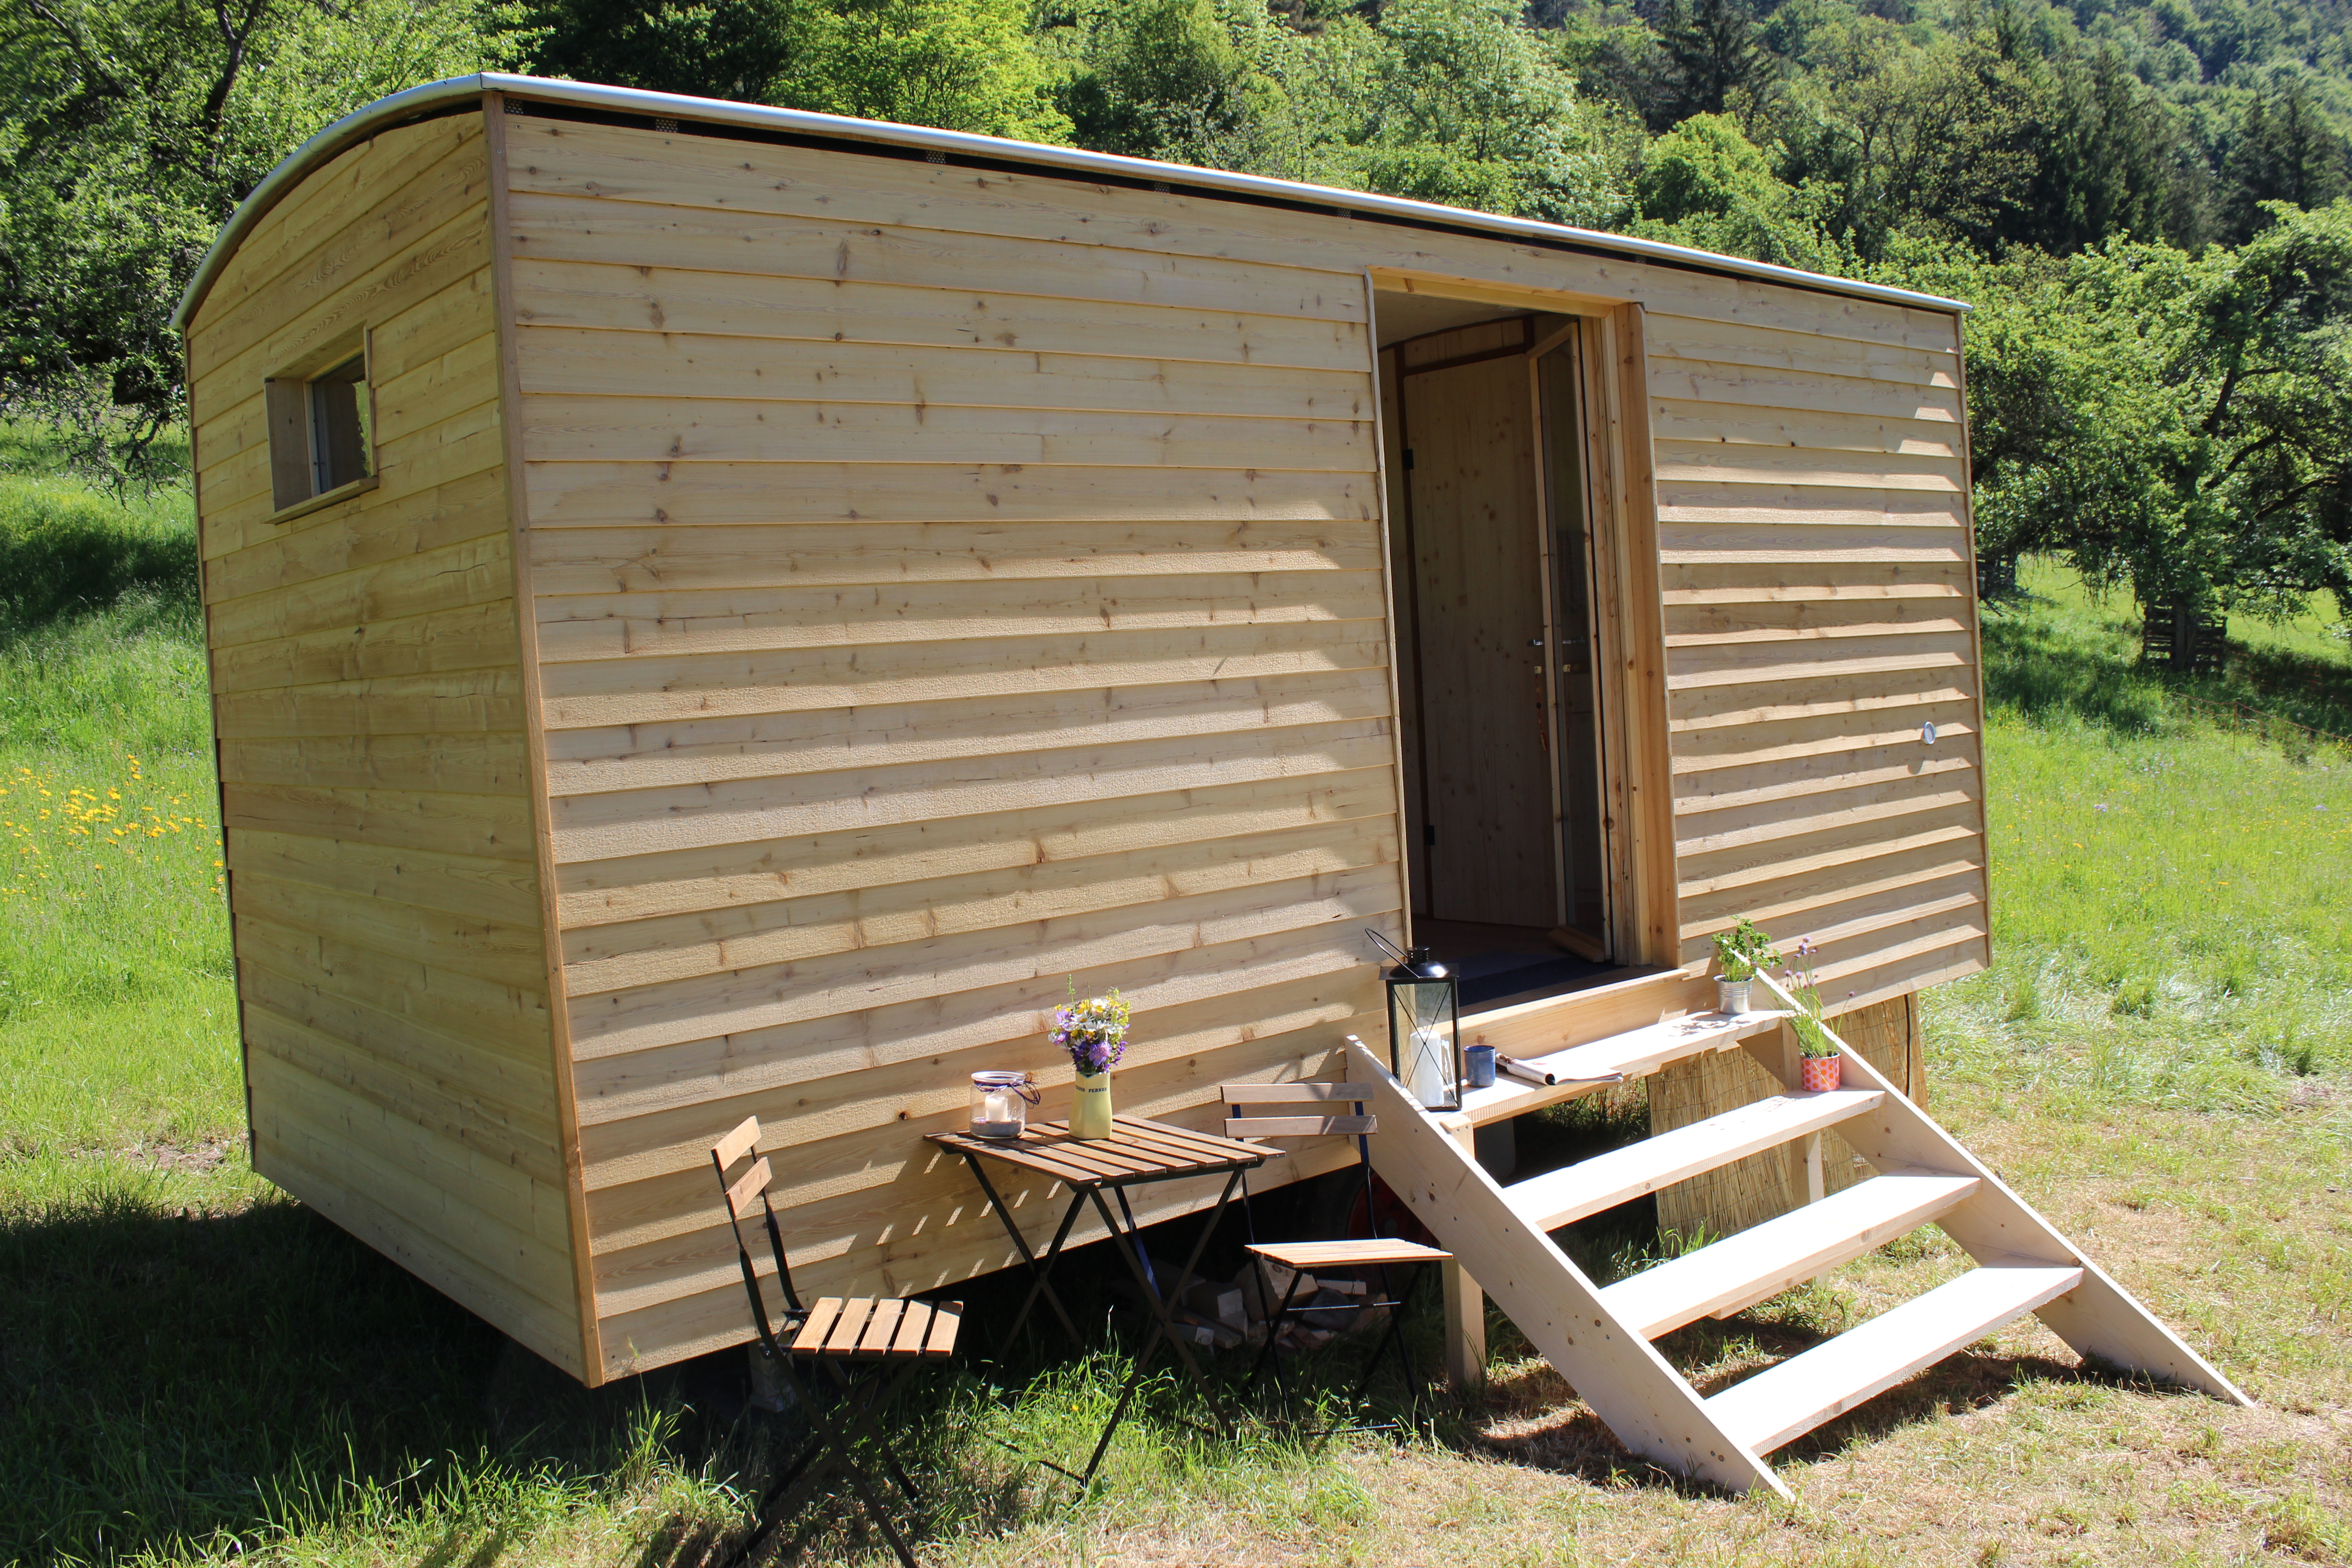 Living in a shepherd's hut - Airbnb